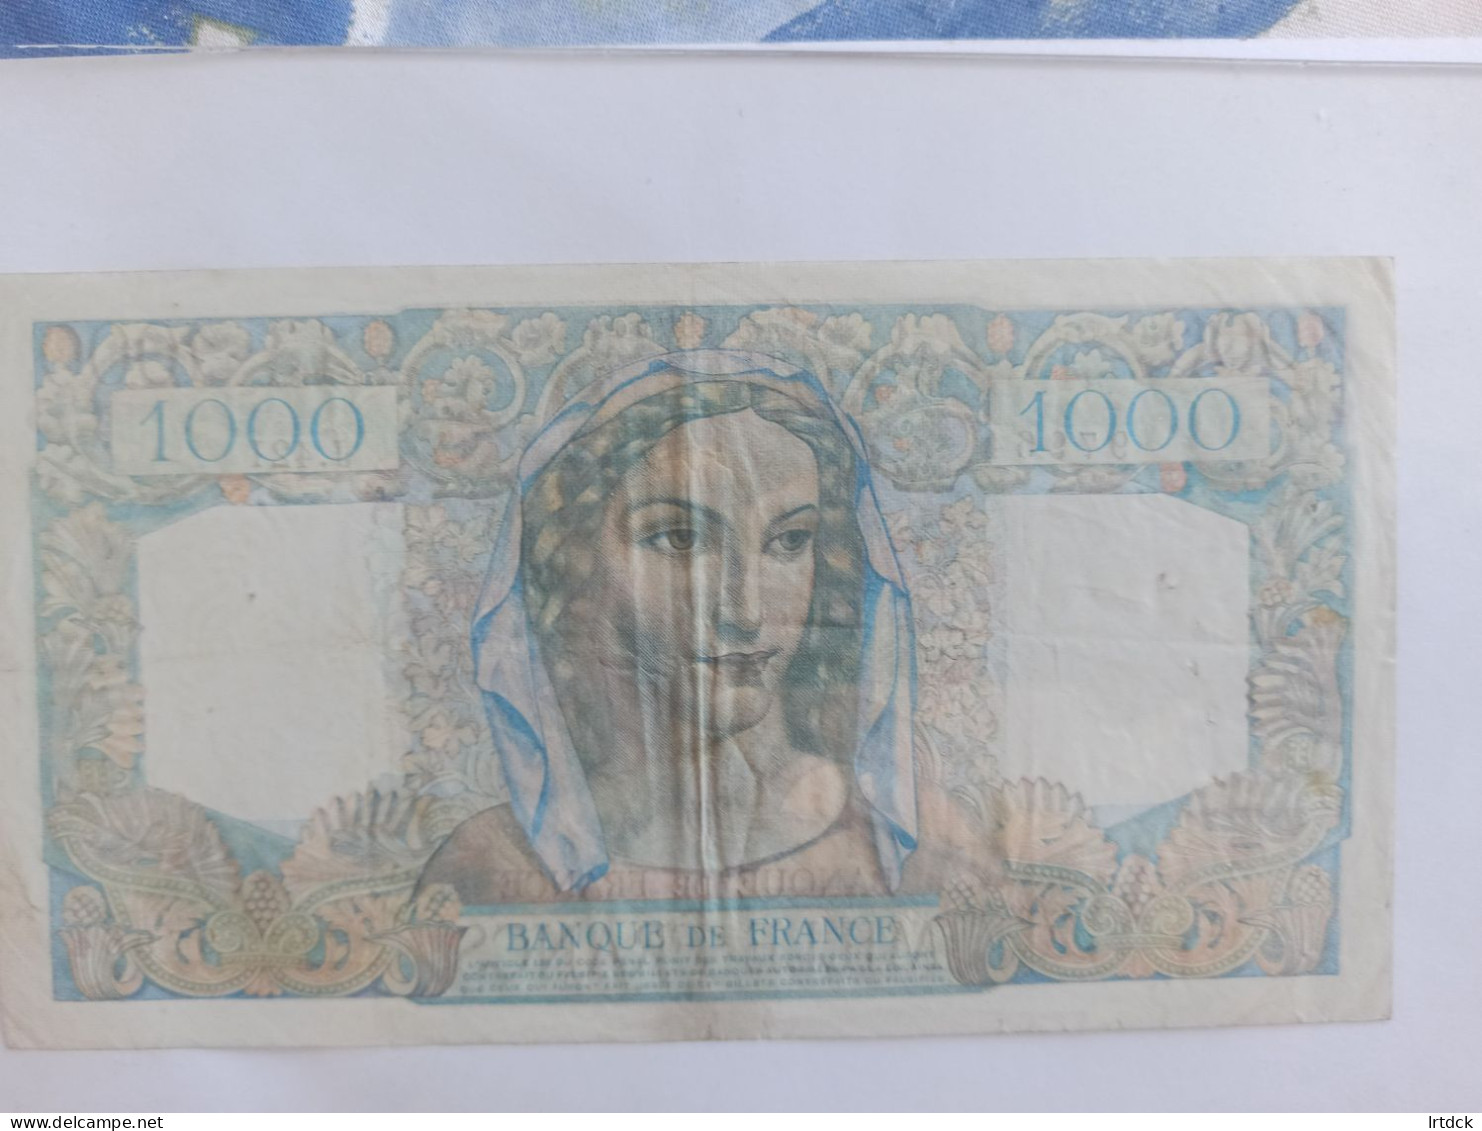 Billet Banque De France 1000 Francs Minerve Et Hercule 27/05/1948 - 1 000 F 1945-1950 ''Minerve Et Hercule''